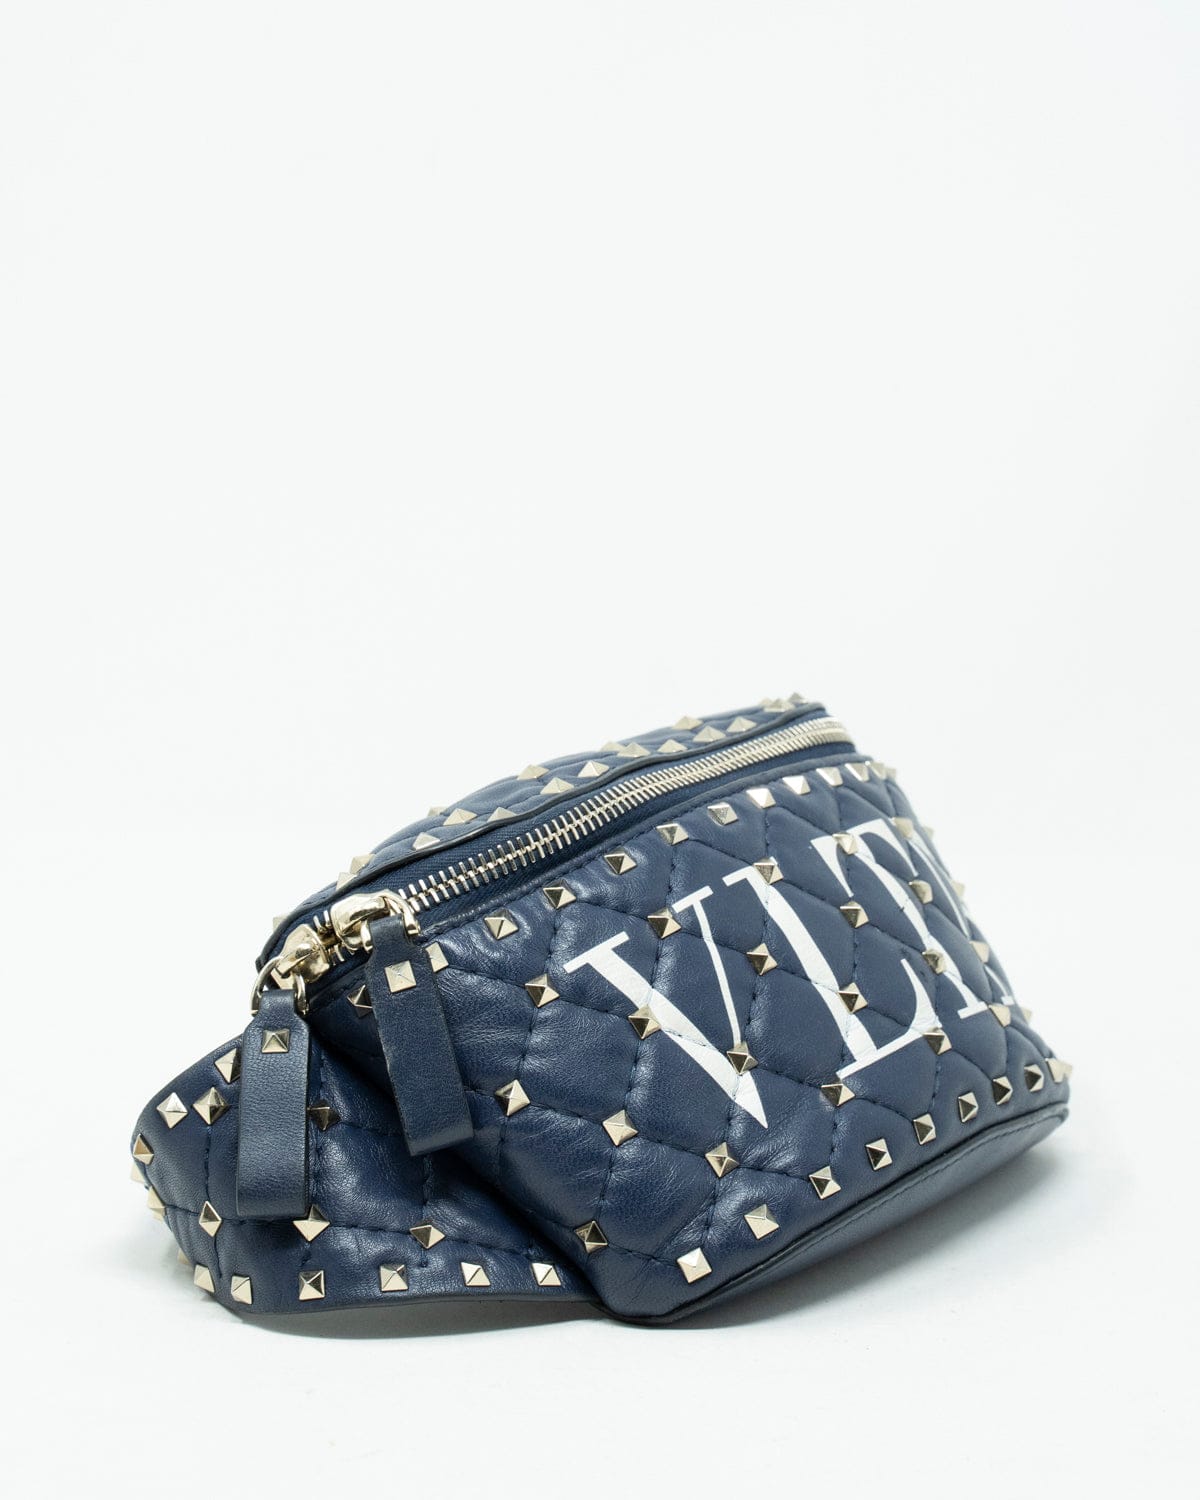 Valentino Valentino VLTN Rockstud Navy Leather Waist Bag - AGL1938